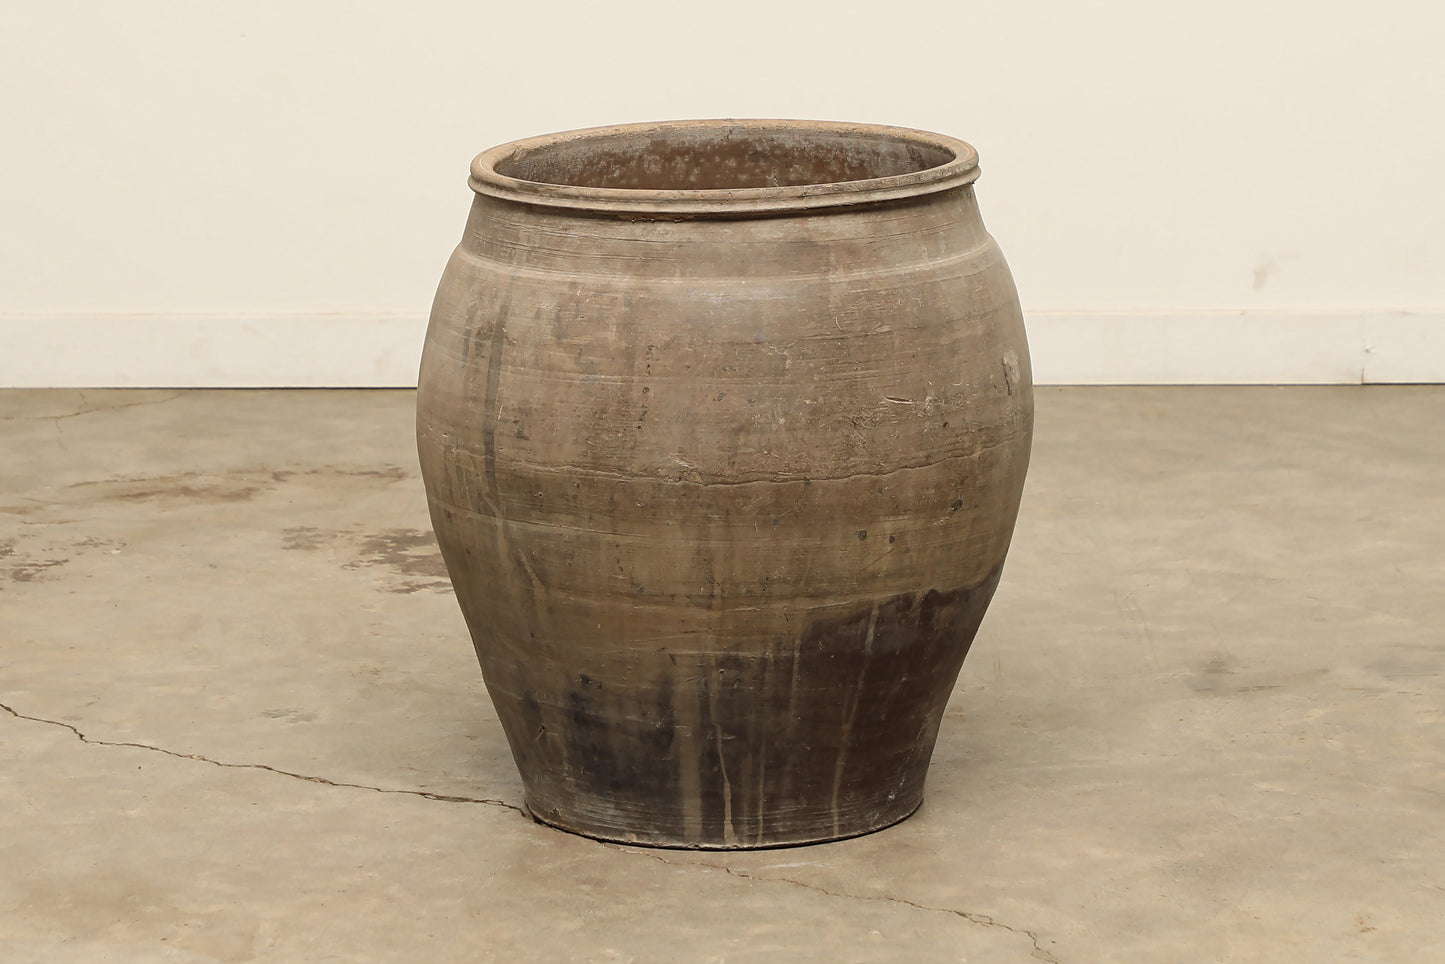 (GAT031) Vintage Shanxi Water Pot - Circa 1824 (20x20x24)